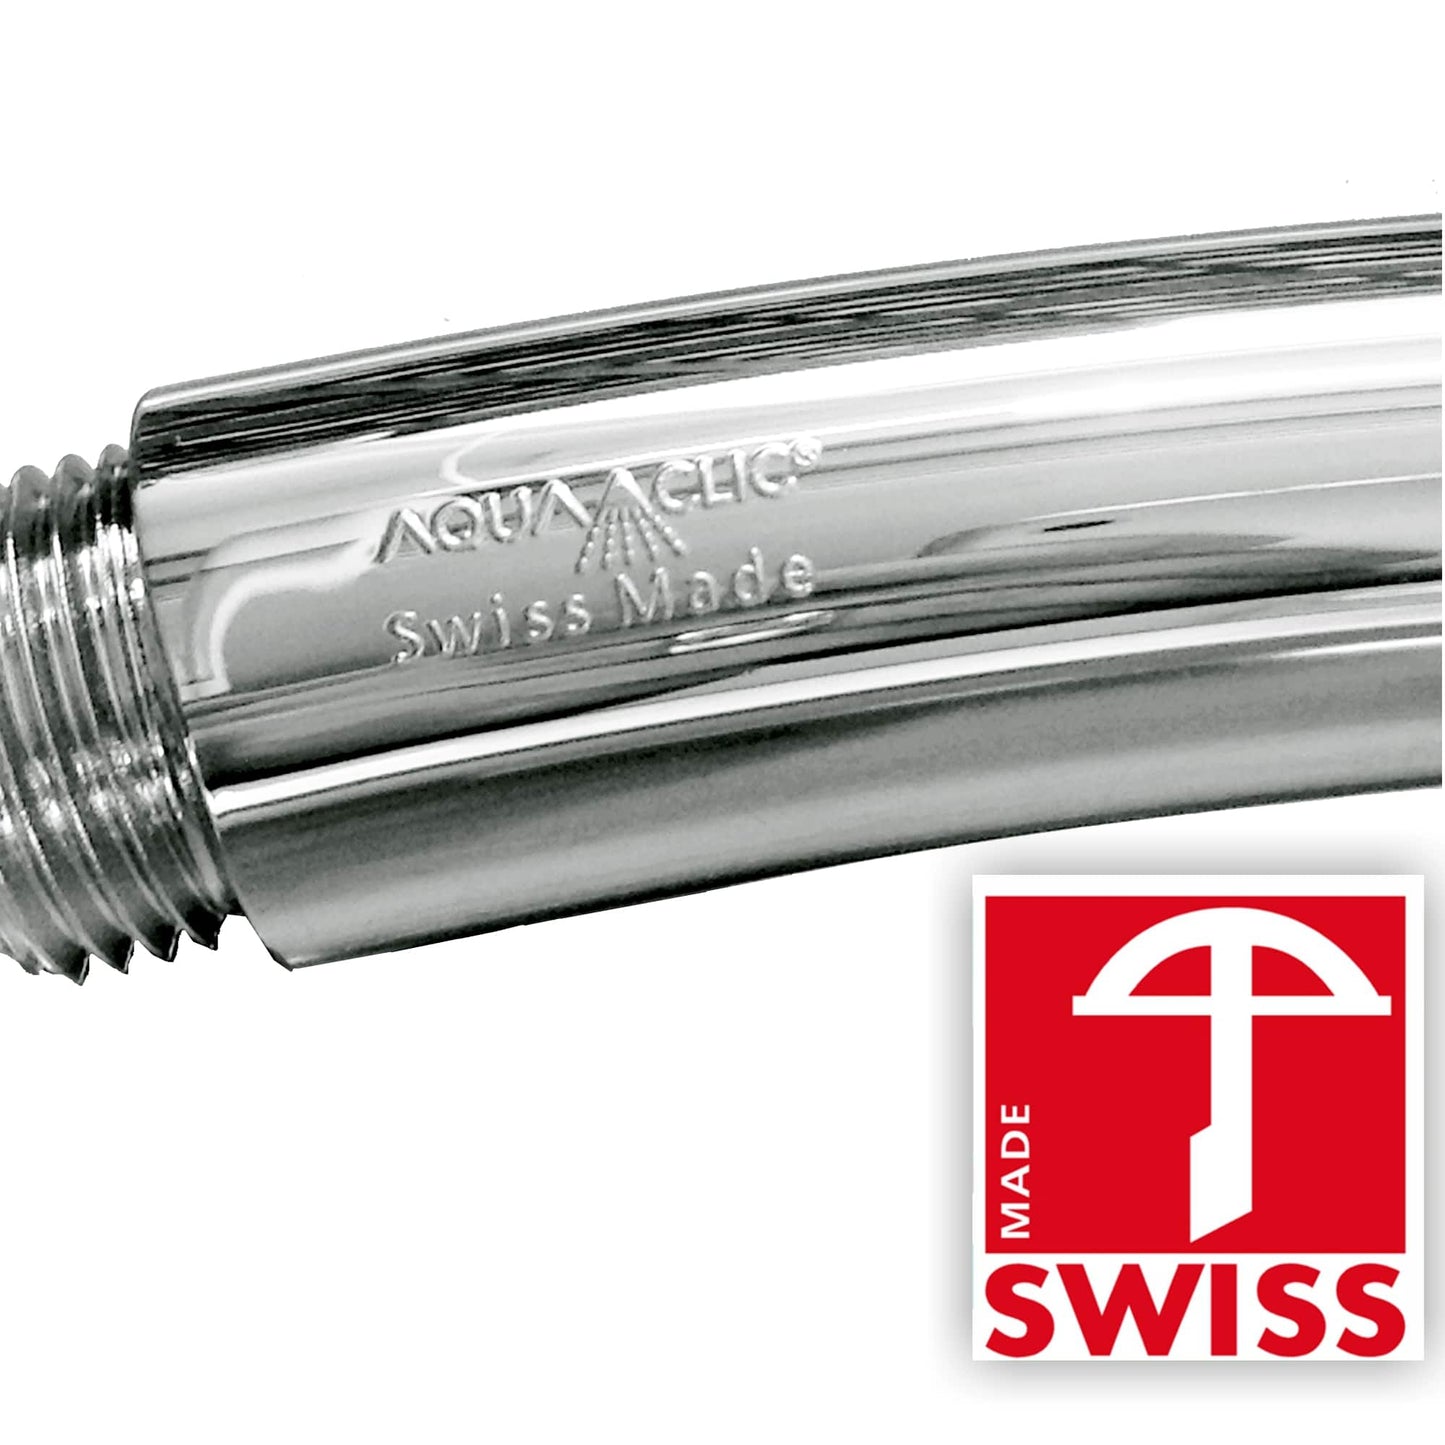 Duschkopf-Griff SwissClima mit Gravur Swiss Made, AquaClic, sowie Armbrustzeichen rot des Labels SwissMade